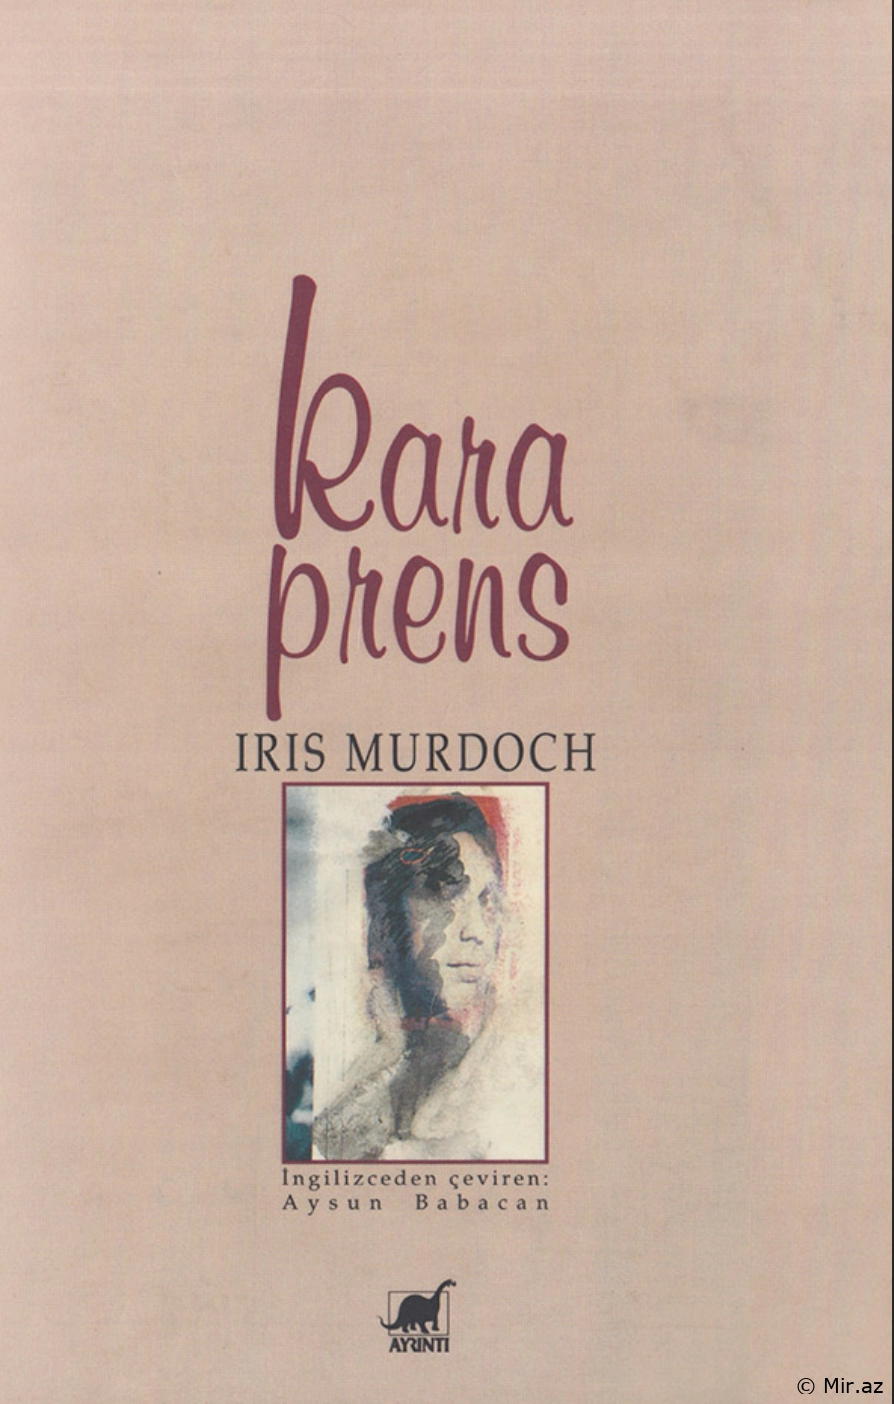 Iris Murdoch "Kara Prens" PDF